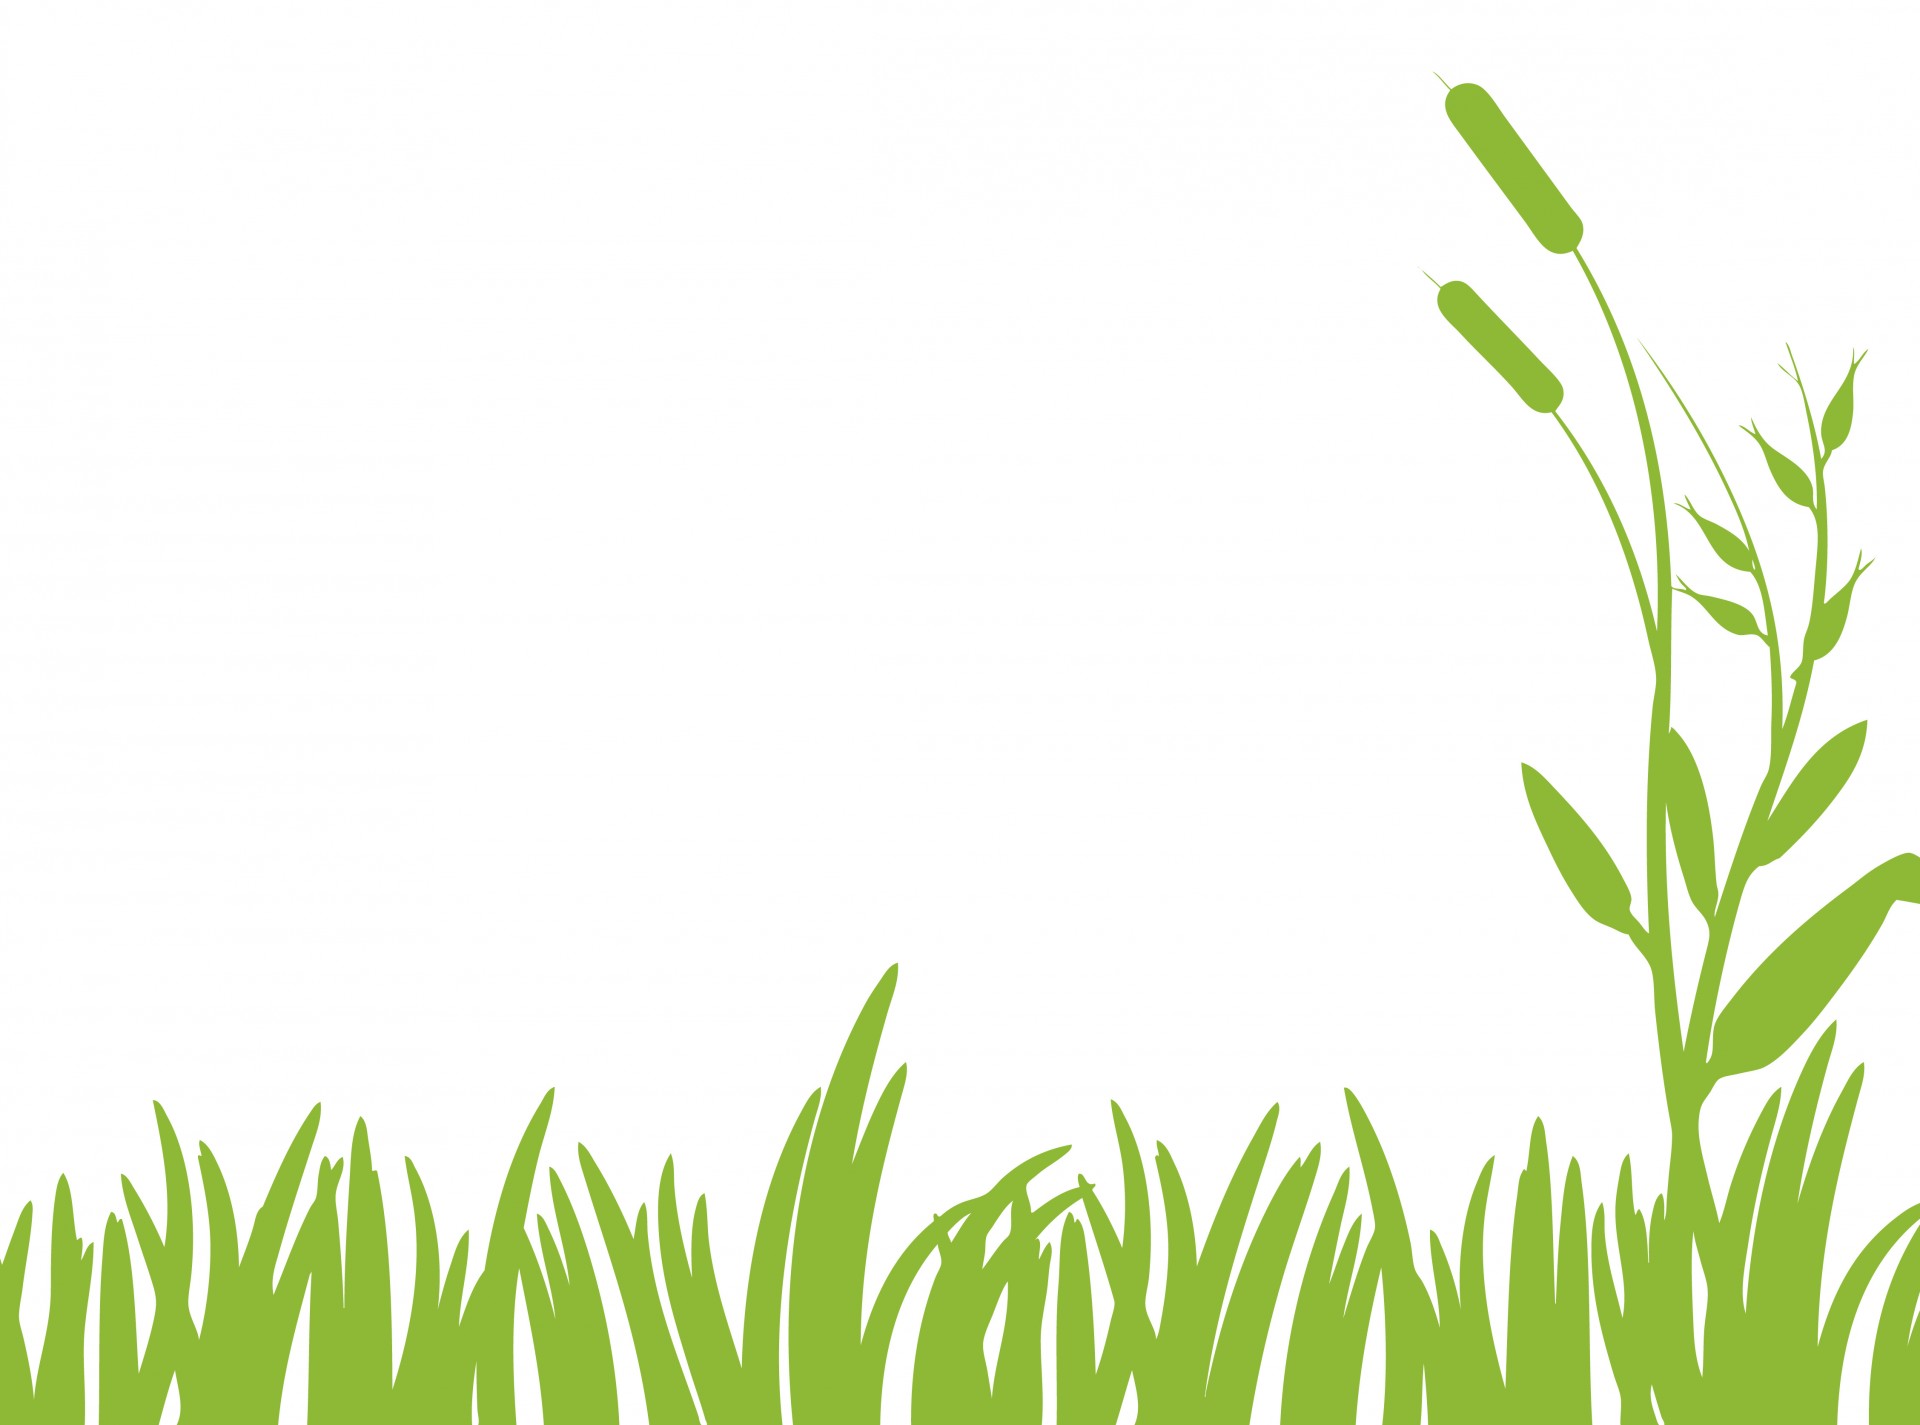 grass silhouette clip art free - photo #47